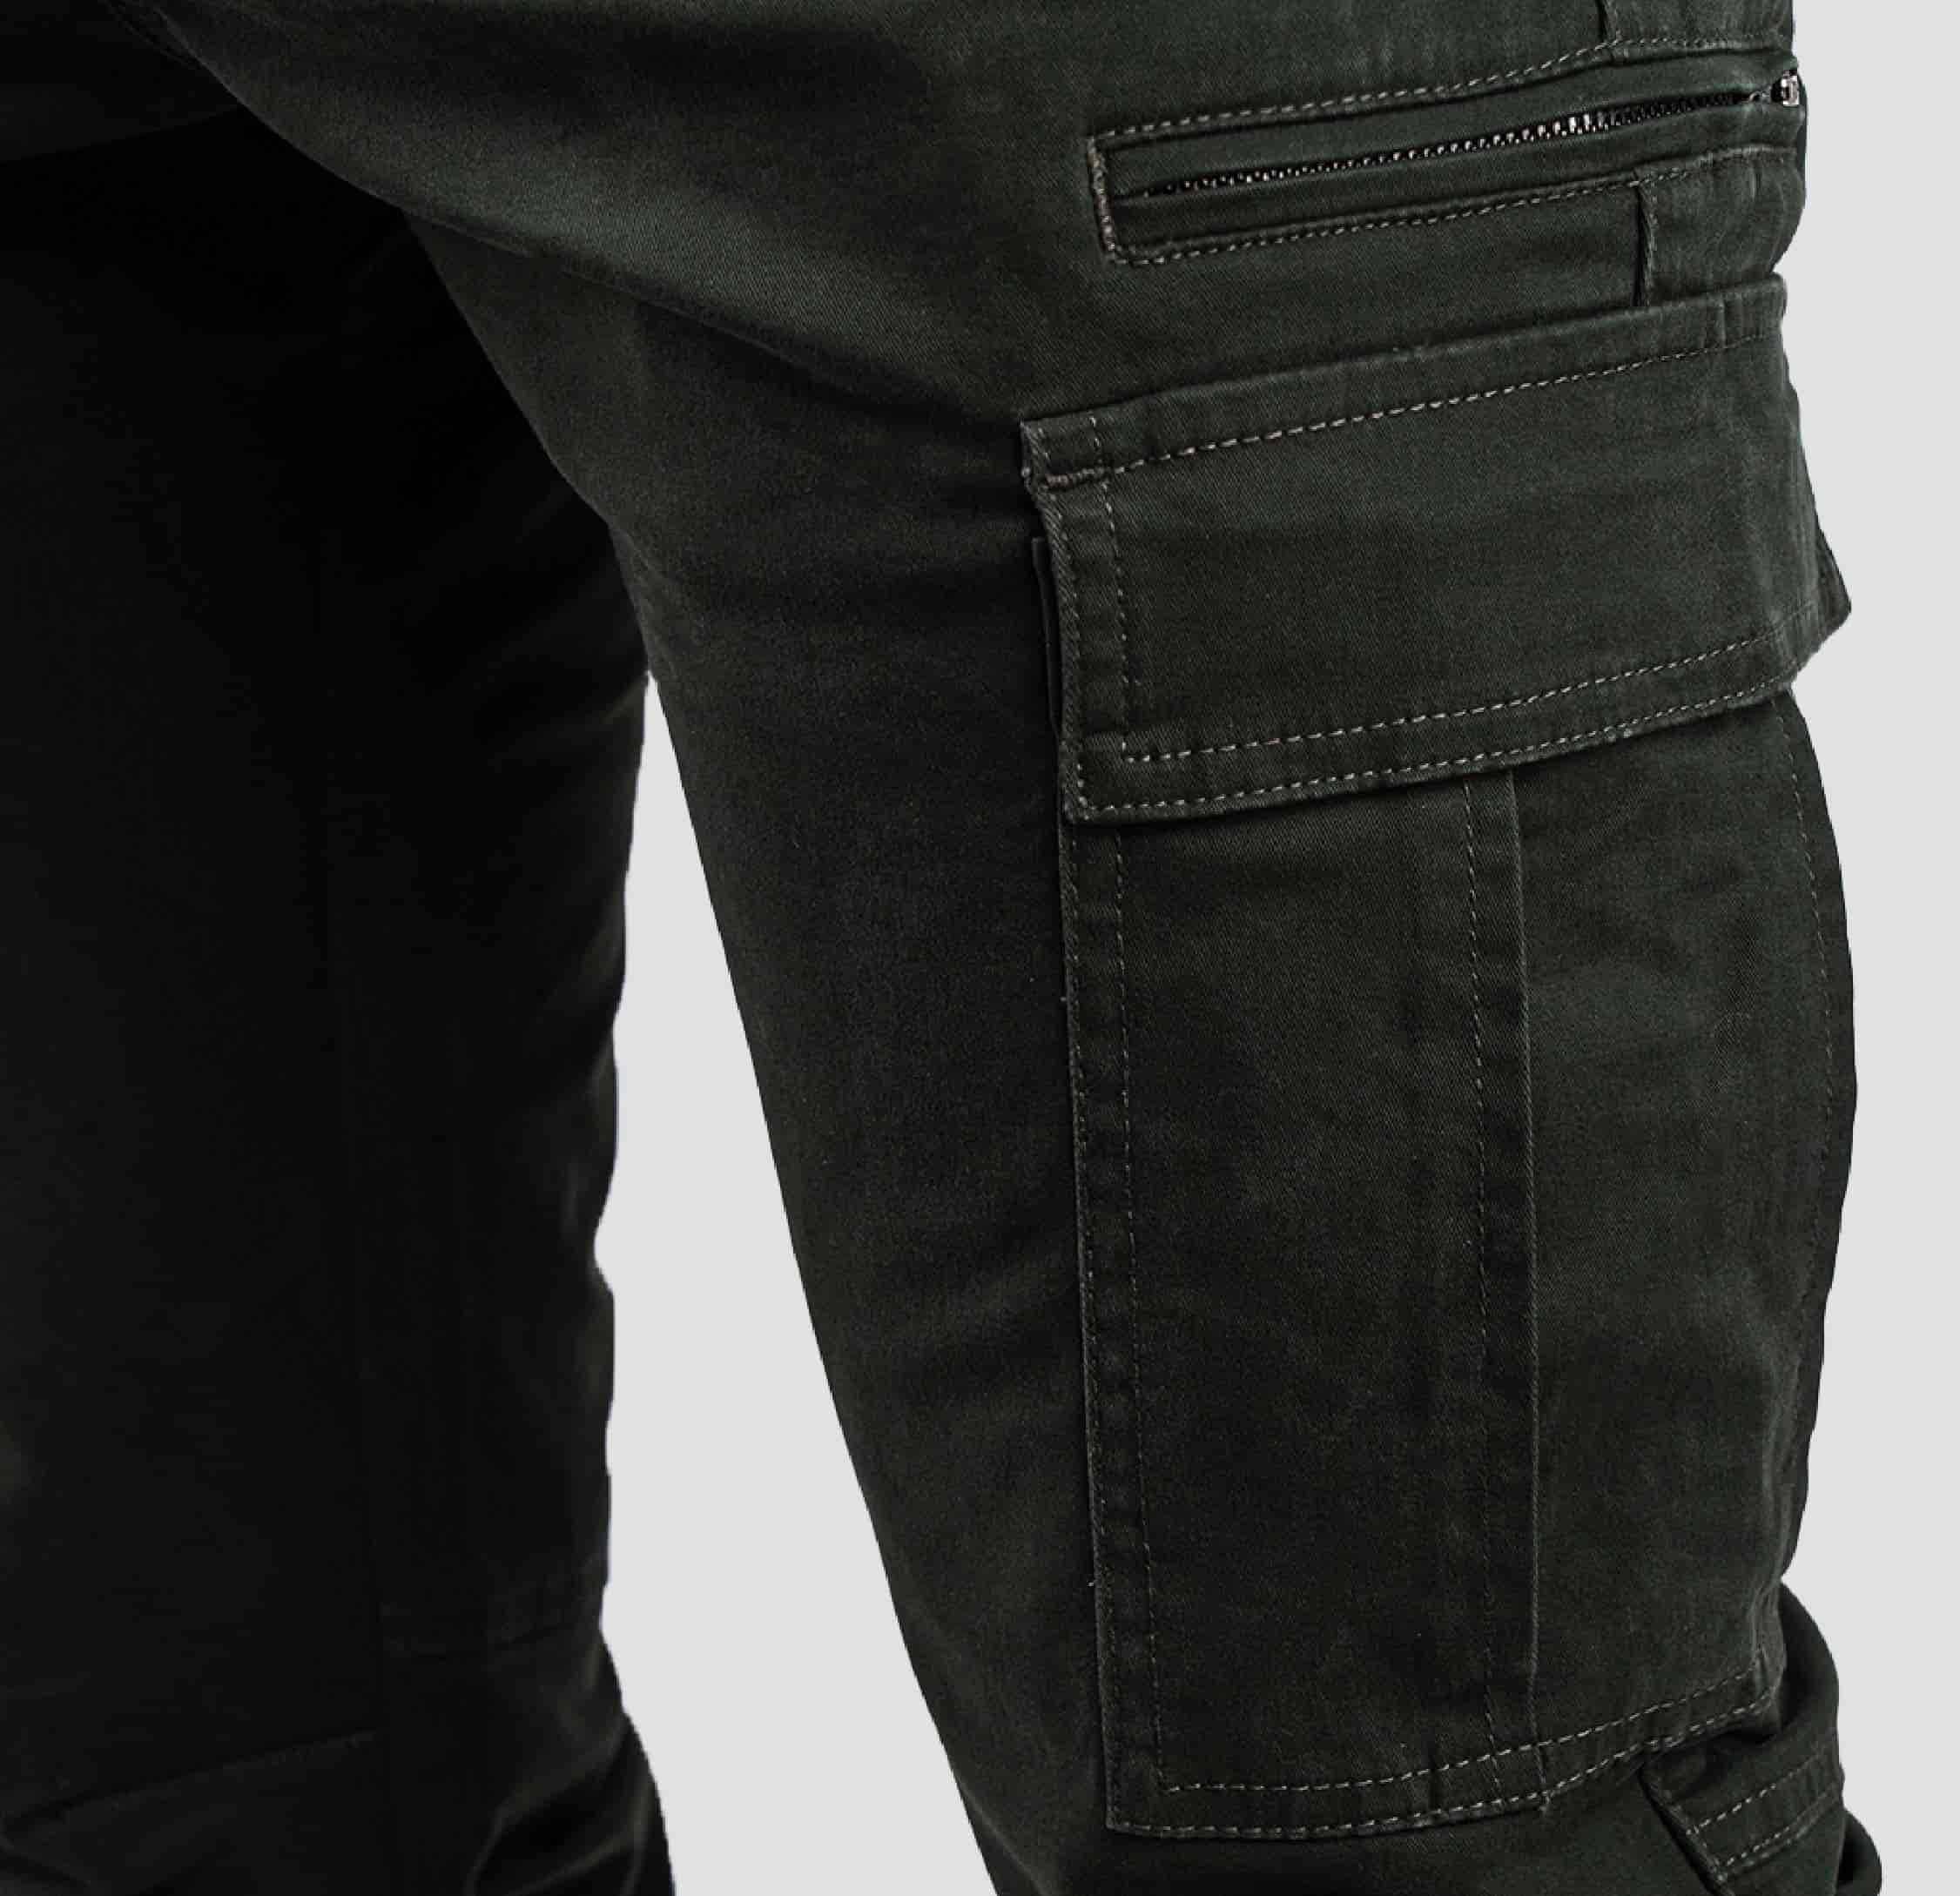 Jeans Regular Fit Black - Curve Gear